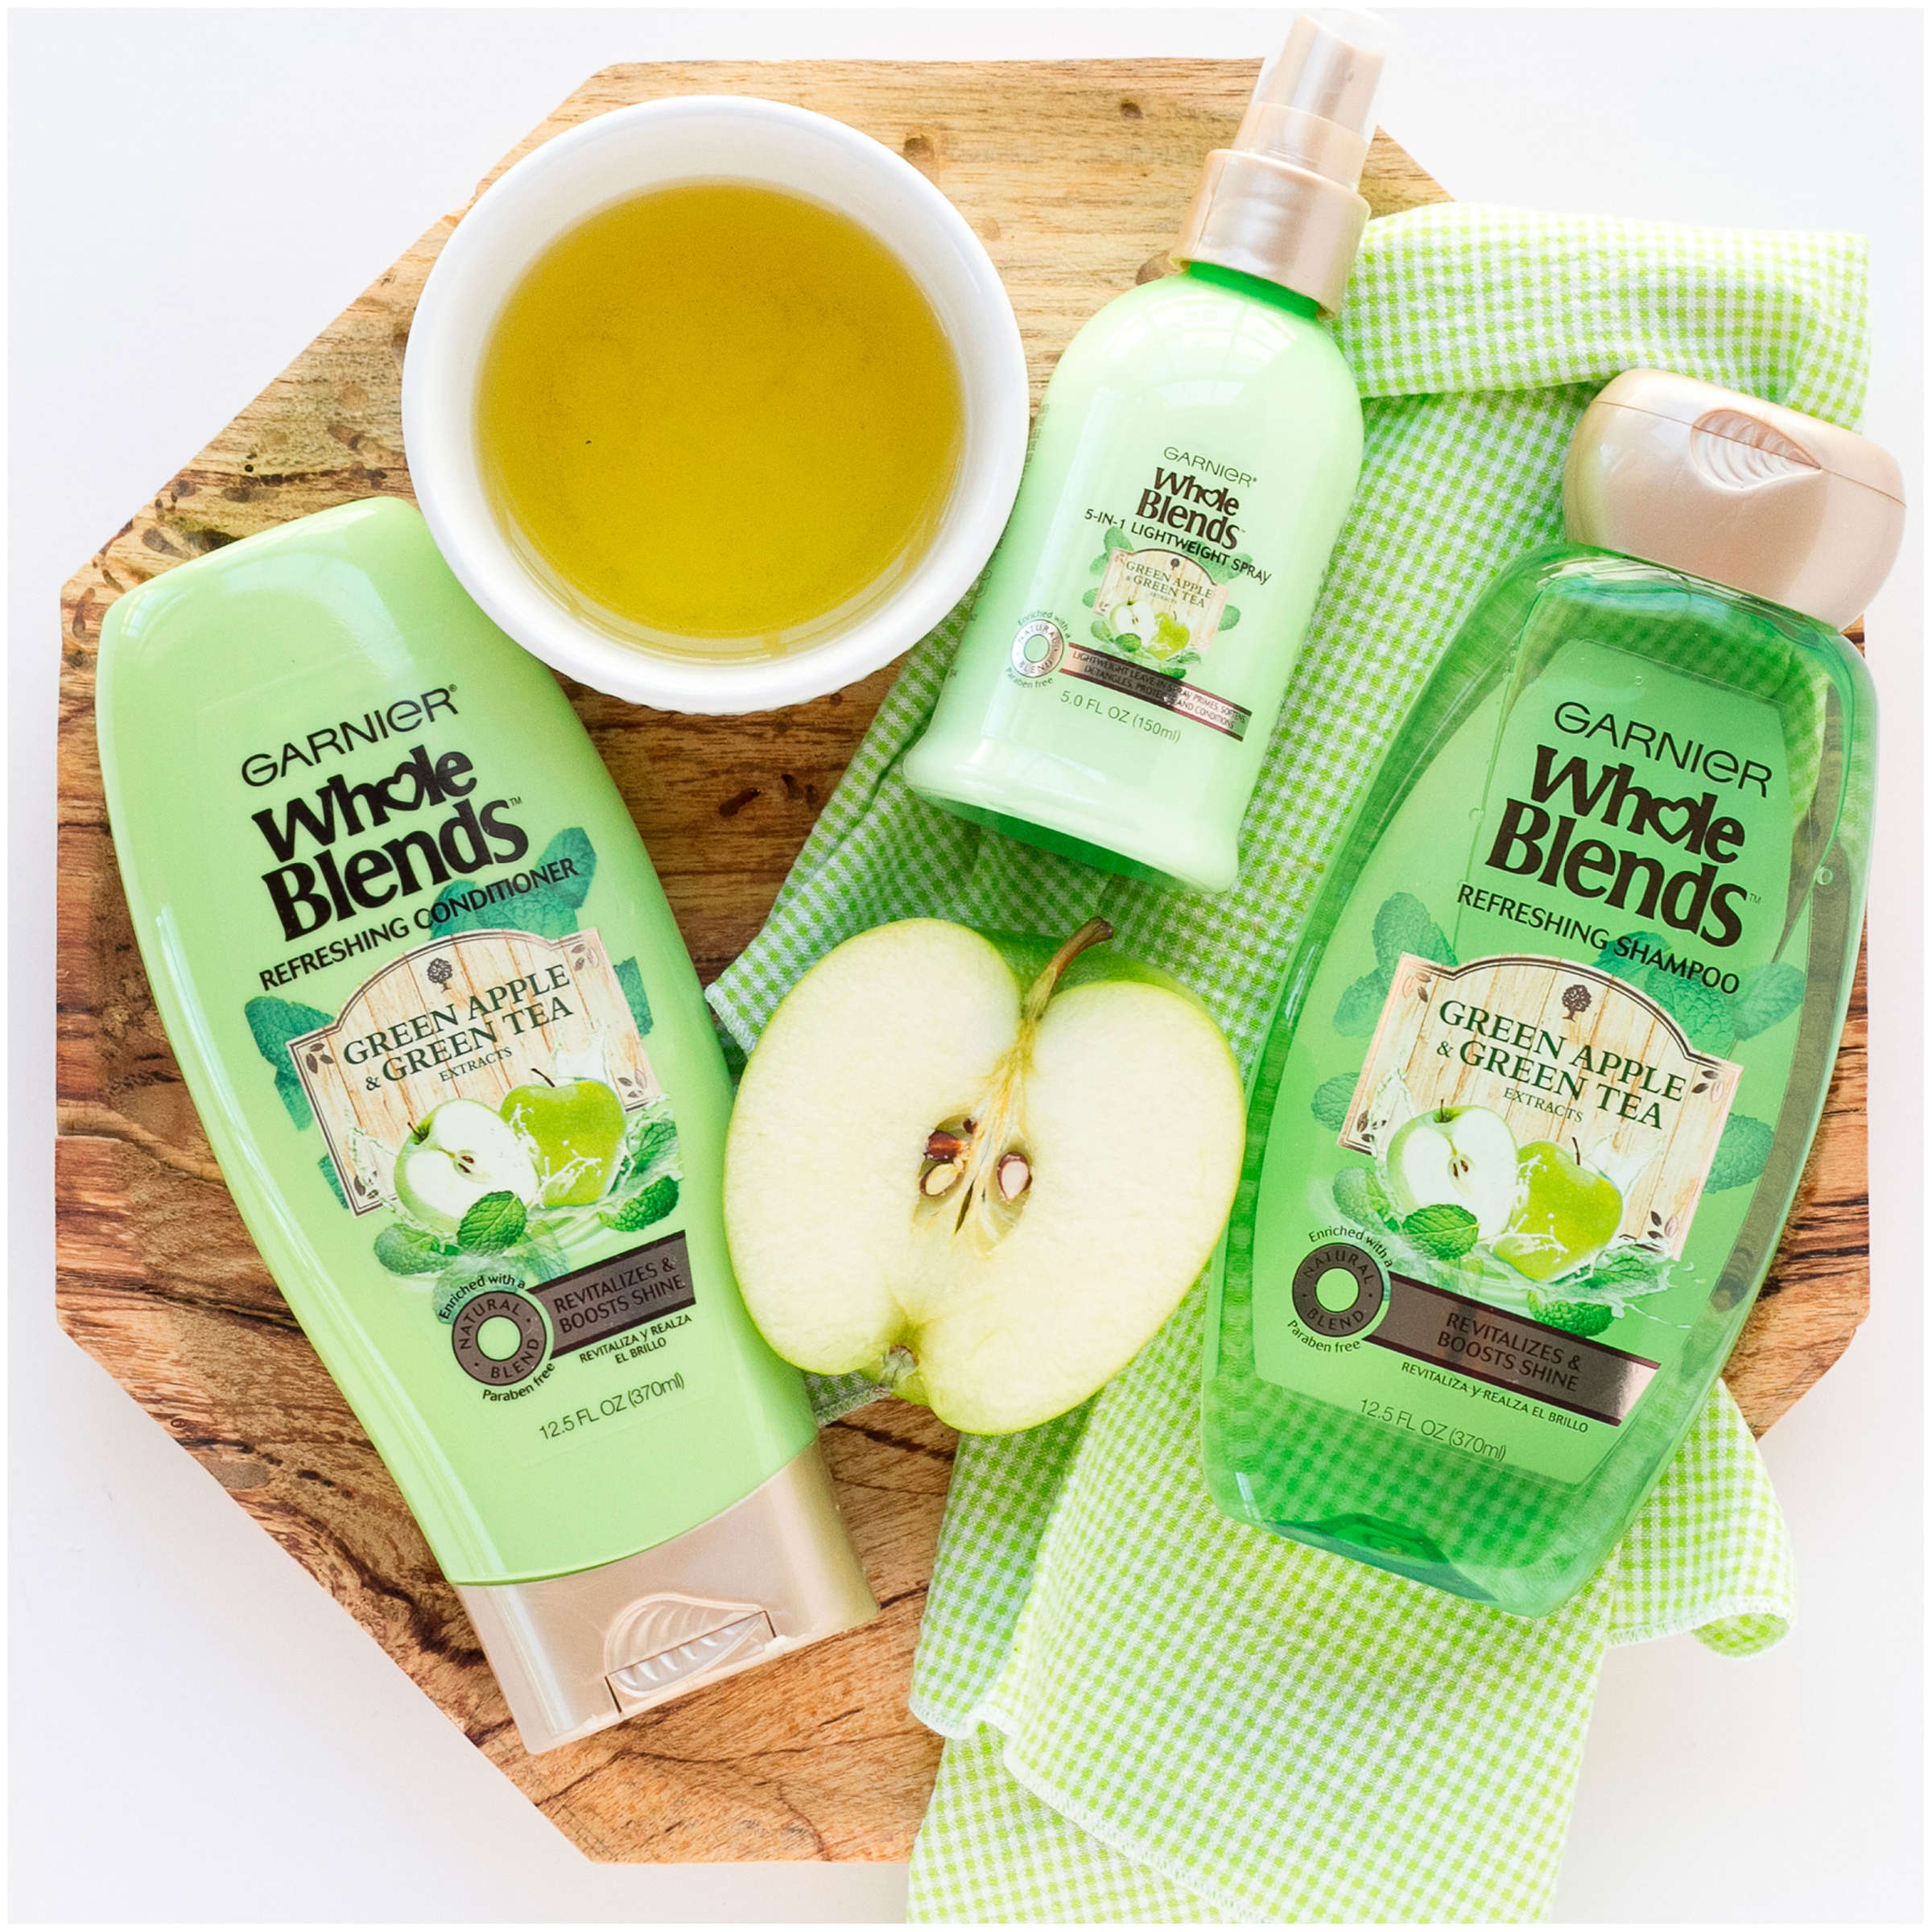 Garnier Whole Blends Shampoo, Green Apple & Green Tea Extracts, 12.5 Fl Oz - image 4 of 11